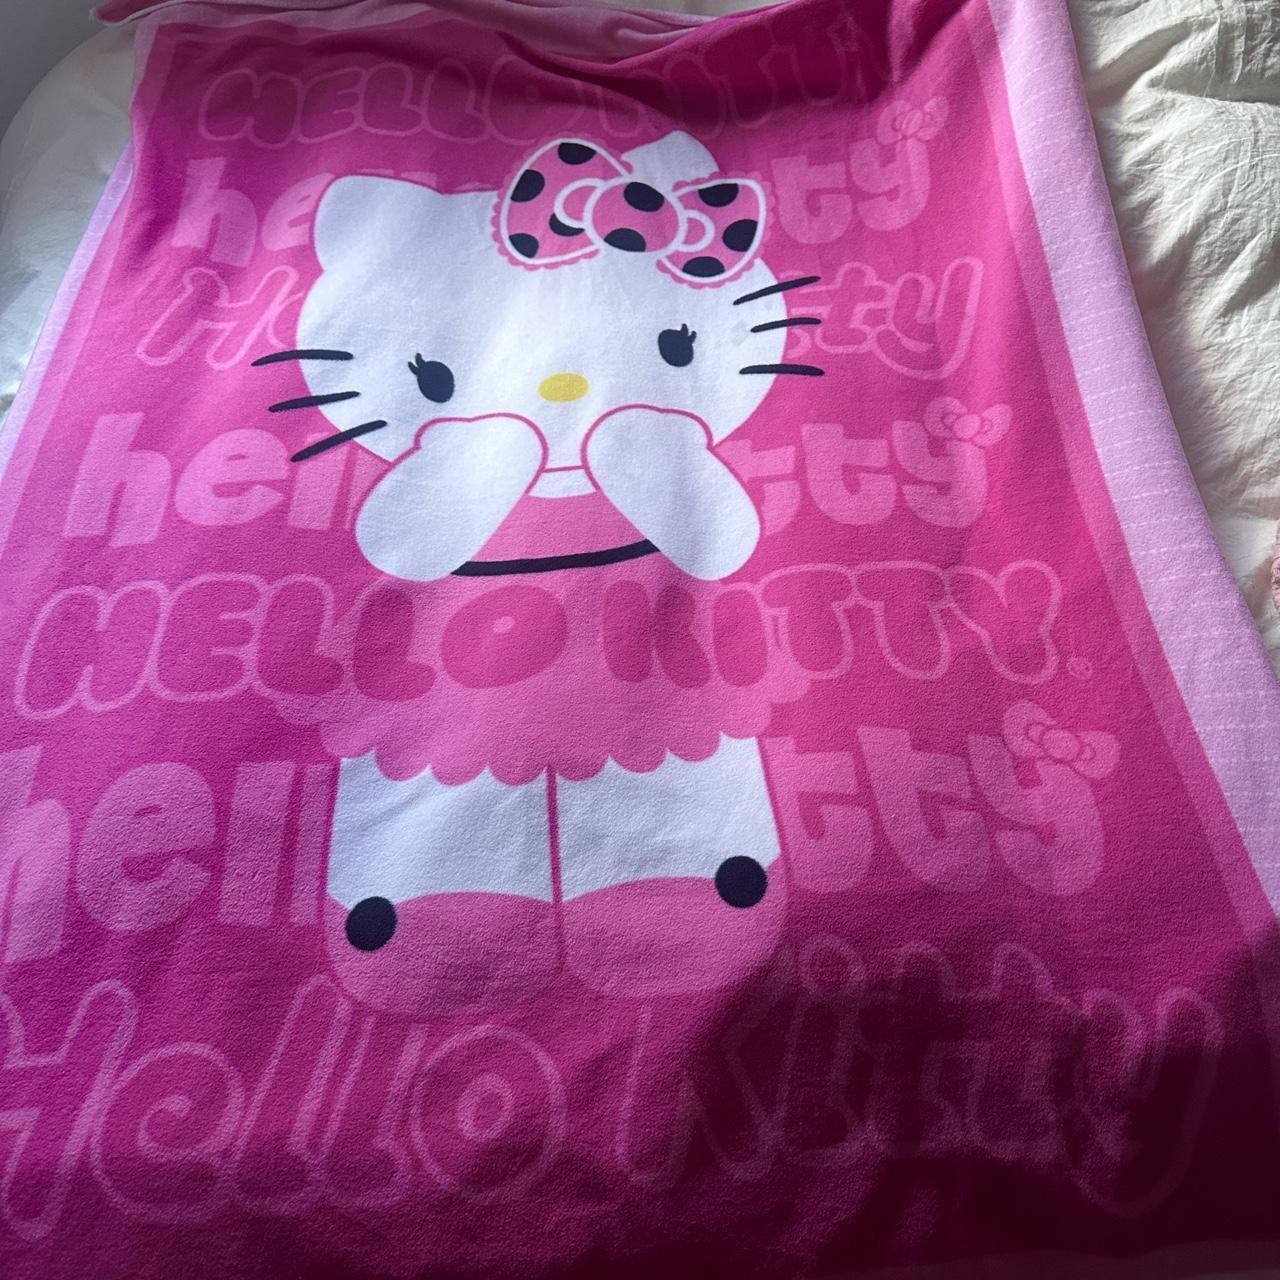 Sanrio hello kitty blanket